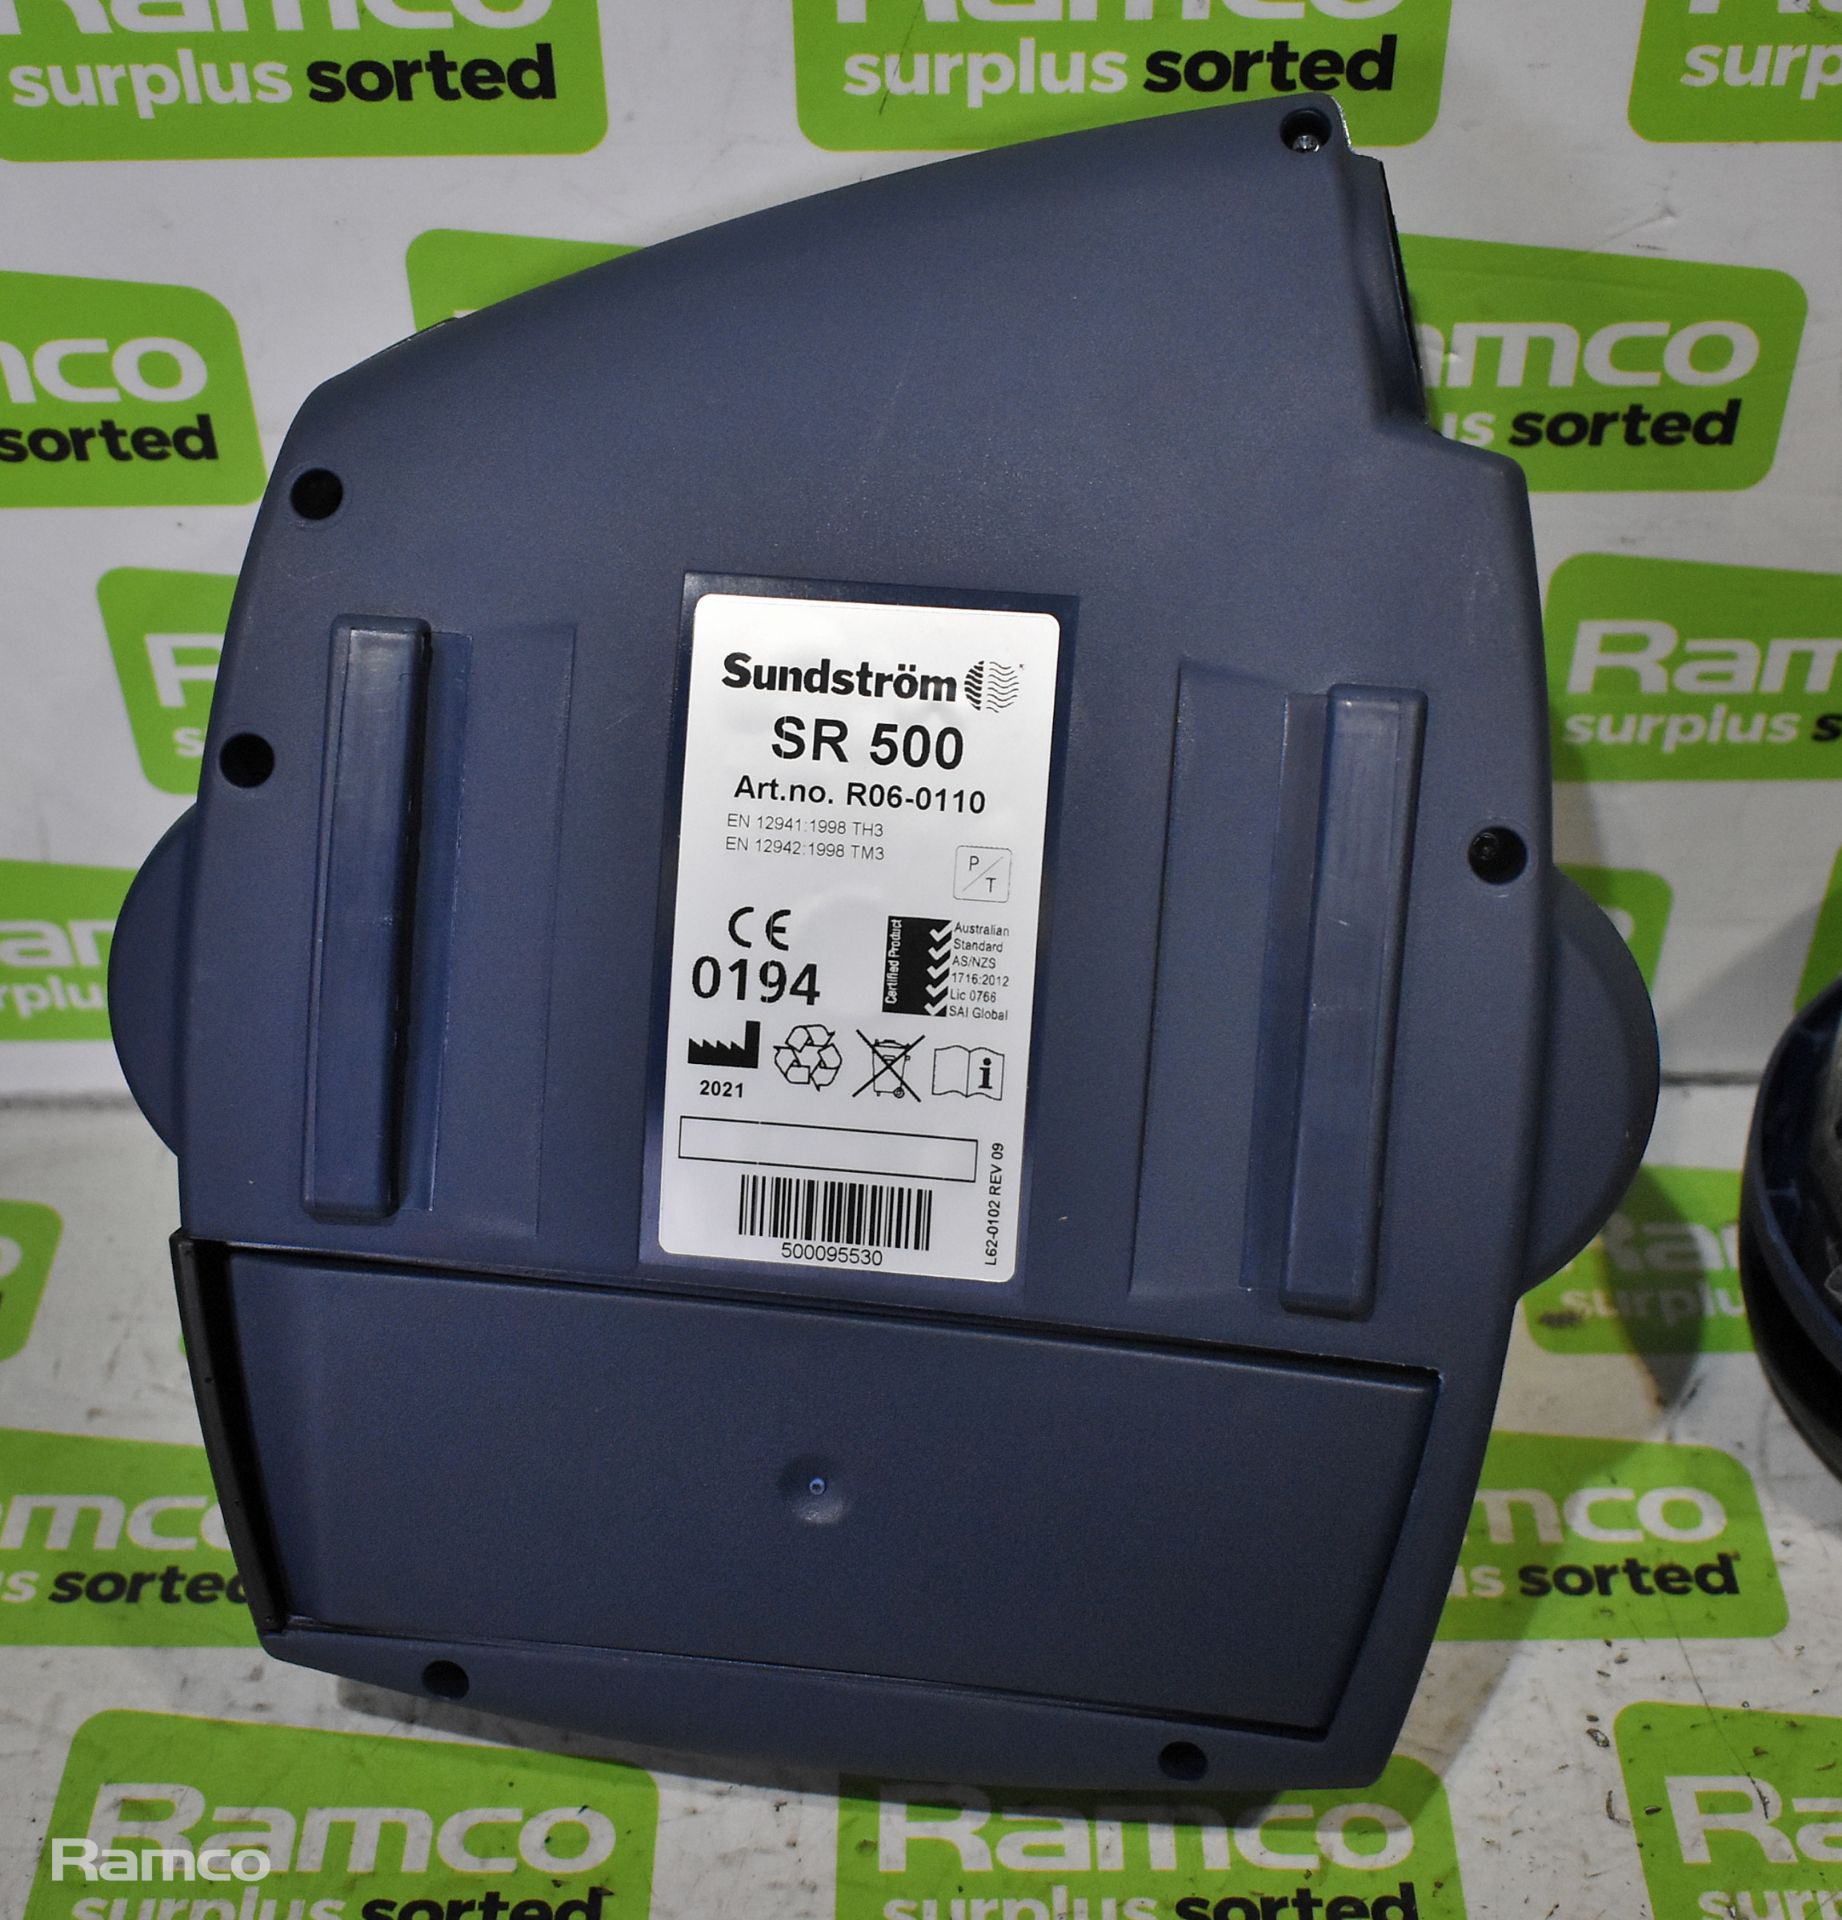 3x Sundstrom SR 500 powered respirator fan units - Image 4 of 11